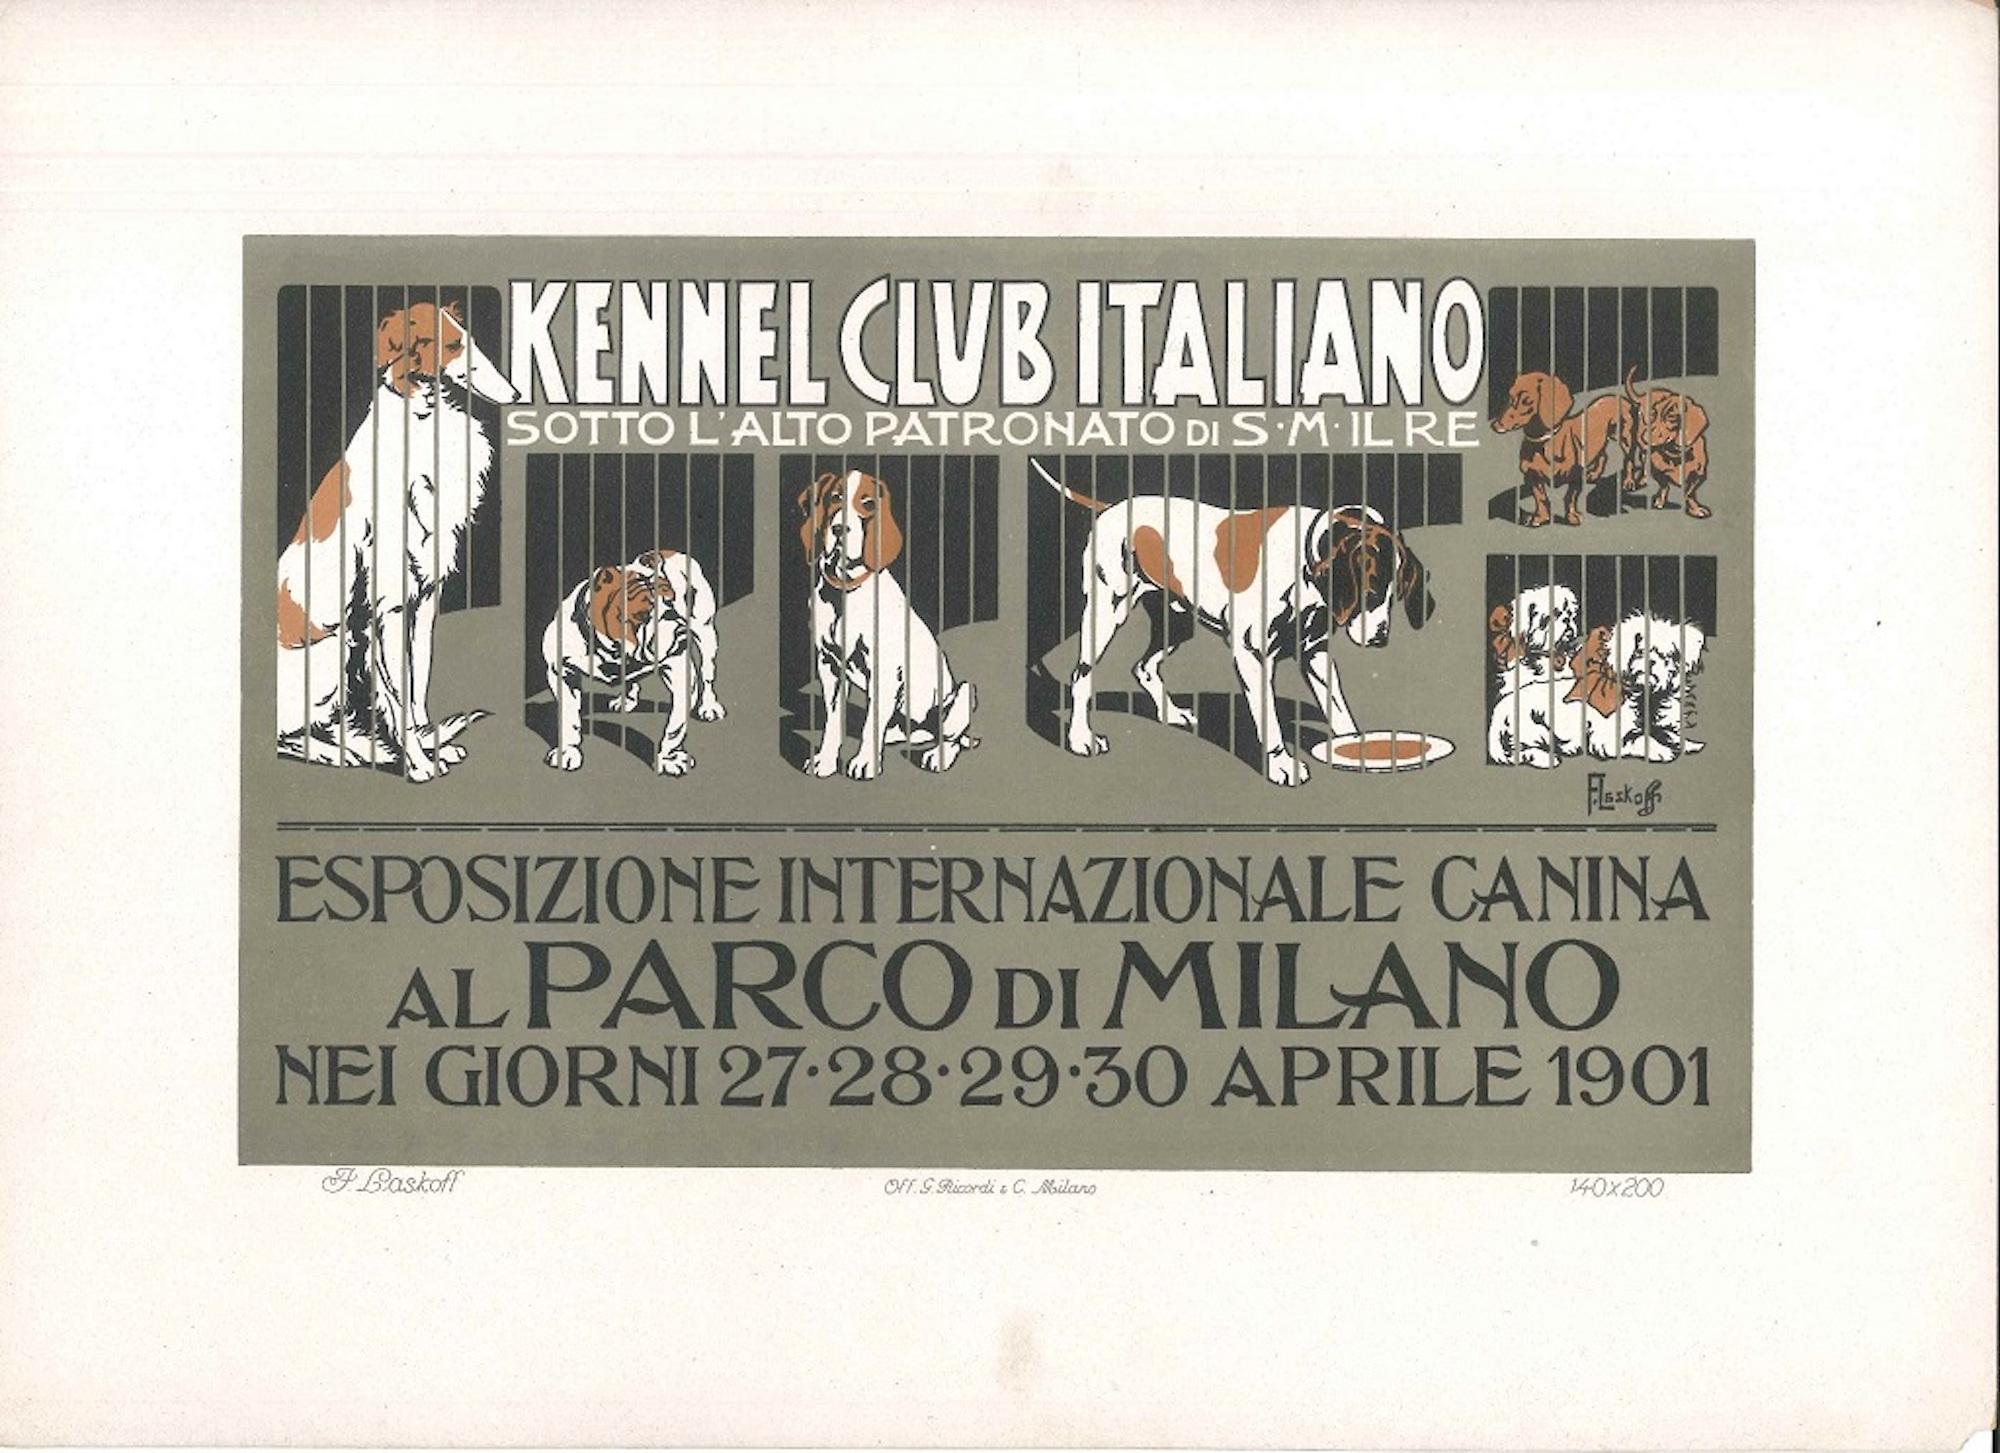 Esposizione Internazionale Canina-Vintage Adv Lithograph by A. Terzi-1900 ca. - Print by Aleardo Terzi